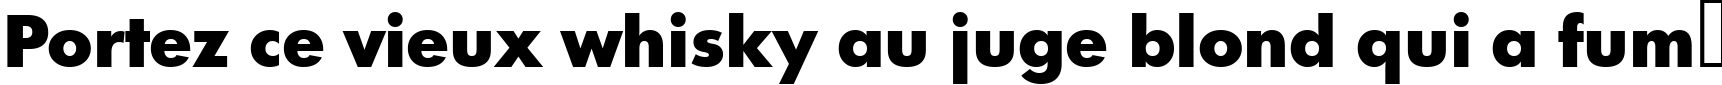 Пример написания шрифтом a_FuturicaBlack текста на французском